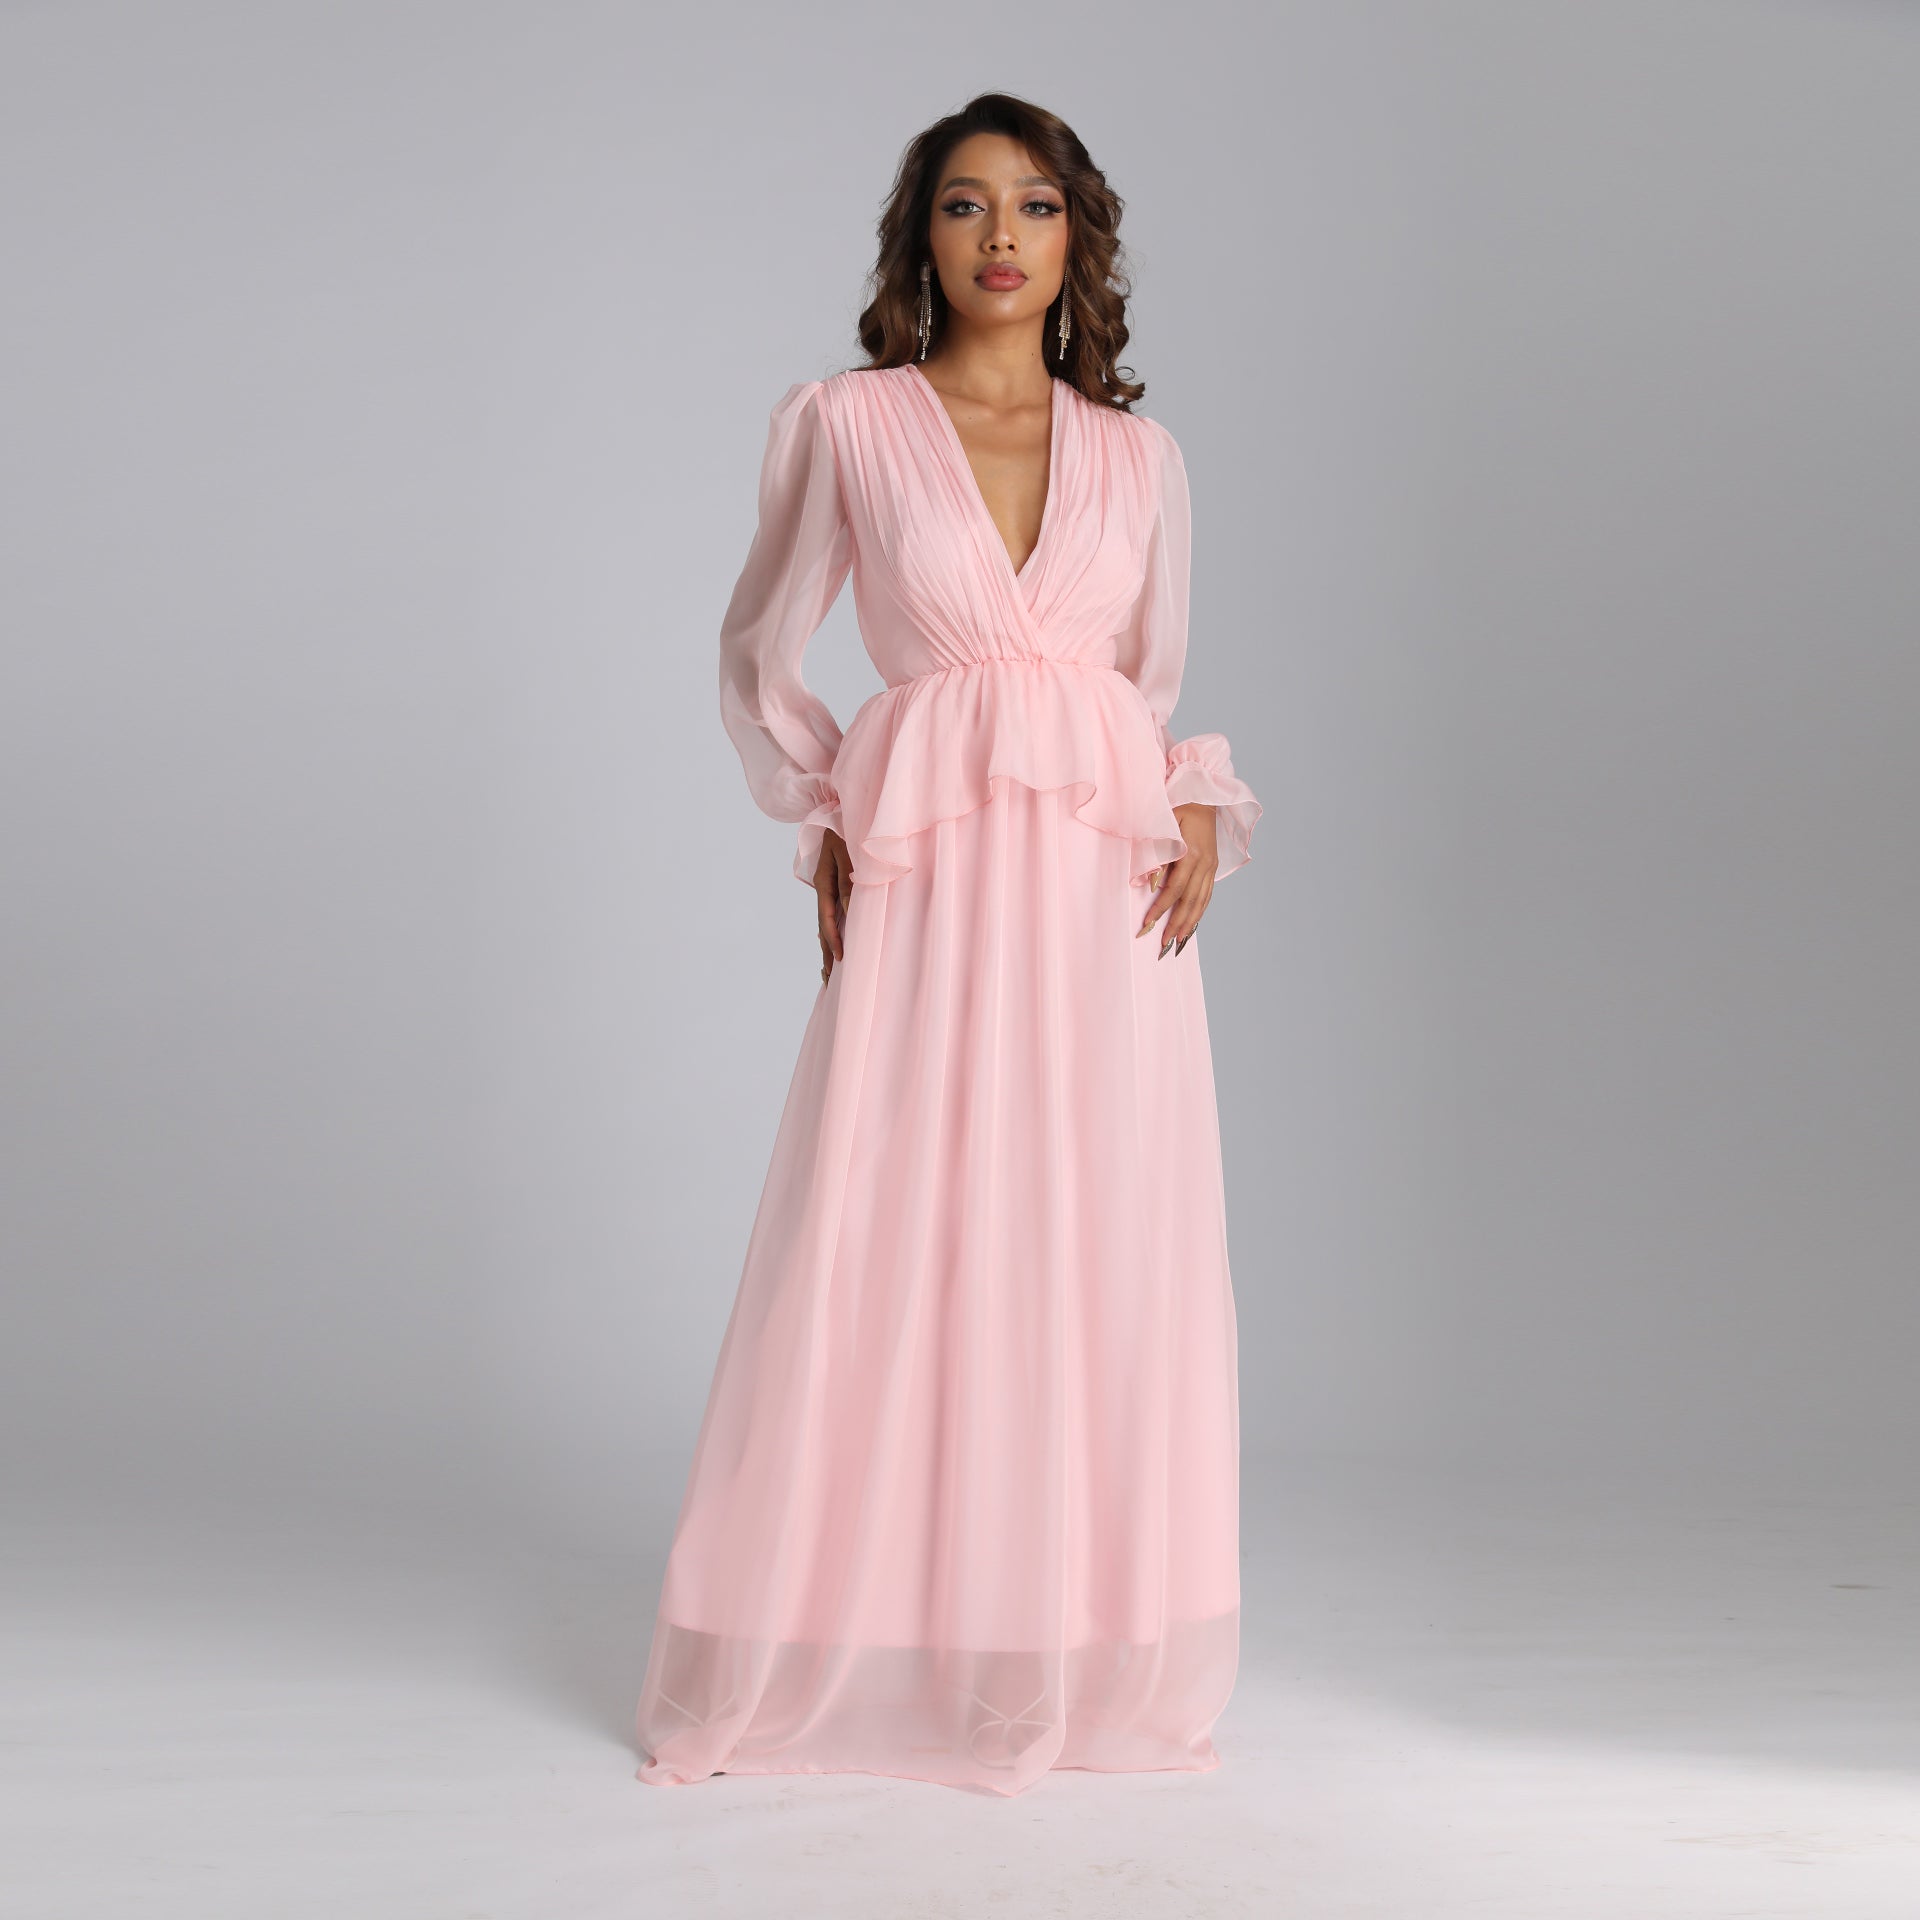 2021 Women New Long Evening Prom Dresses olid color pressure crepe Middle Eastern elegant Muslim dress